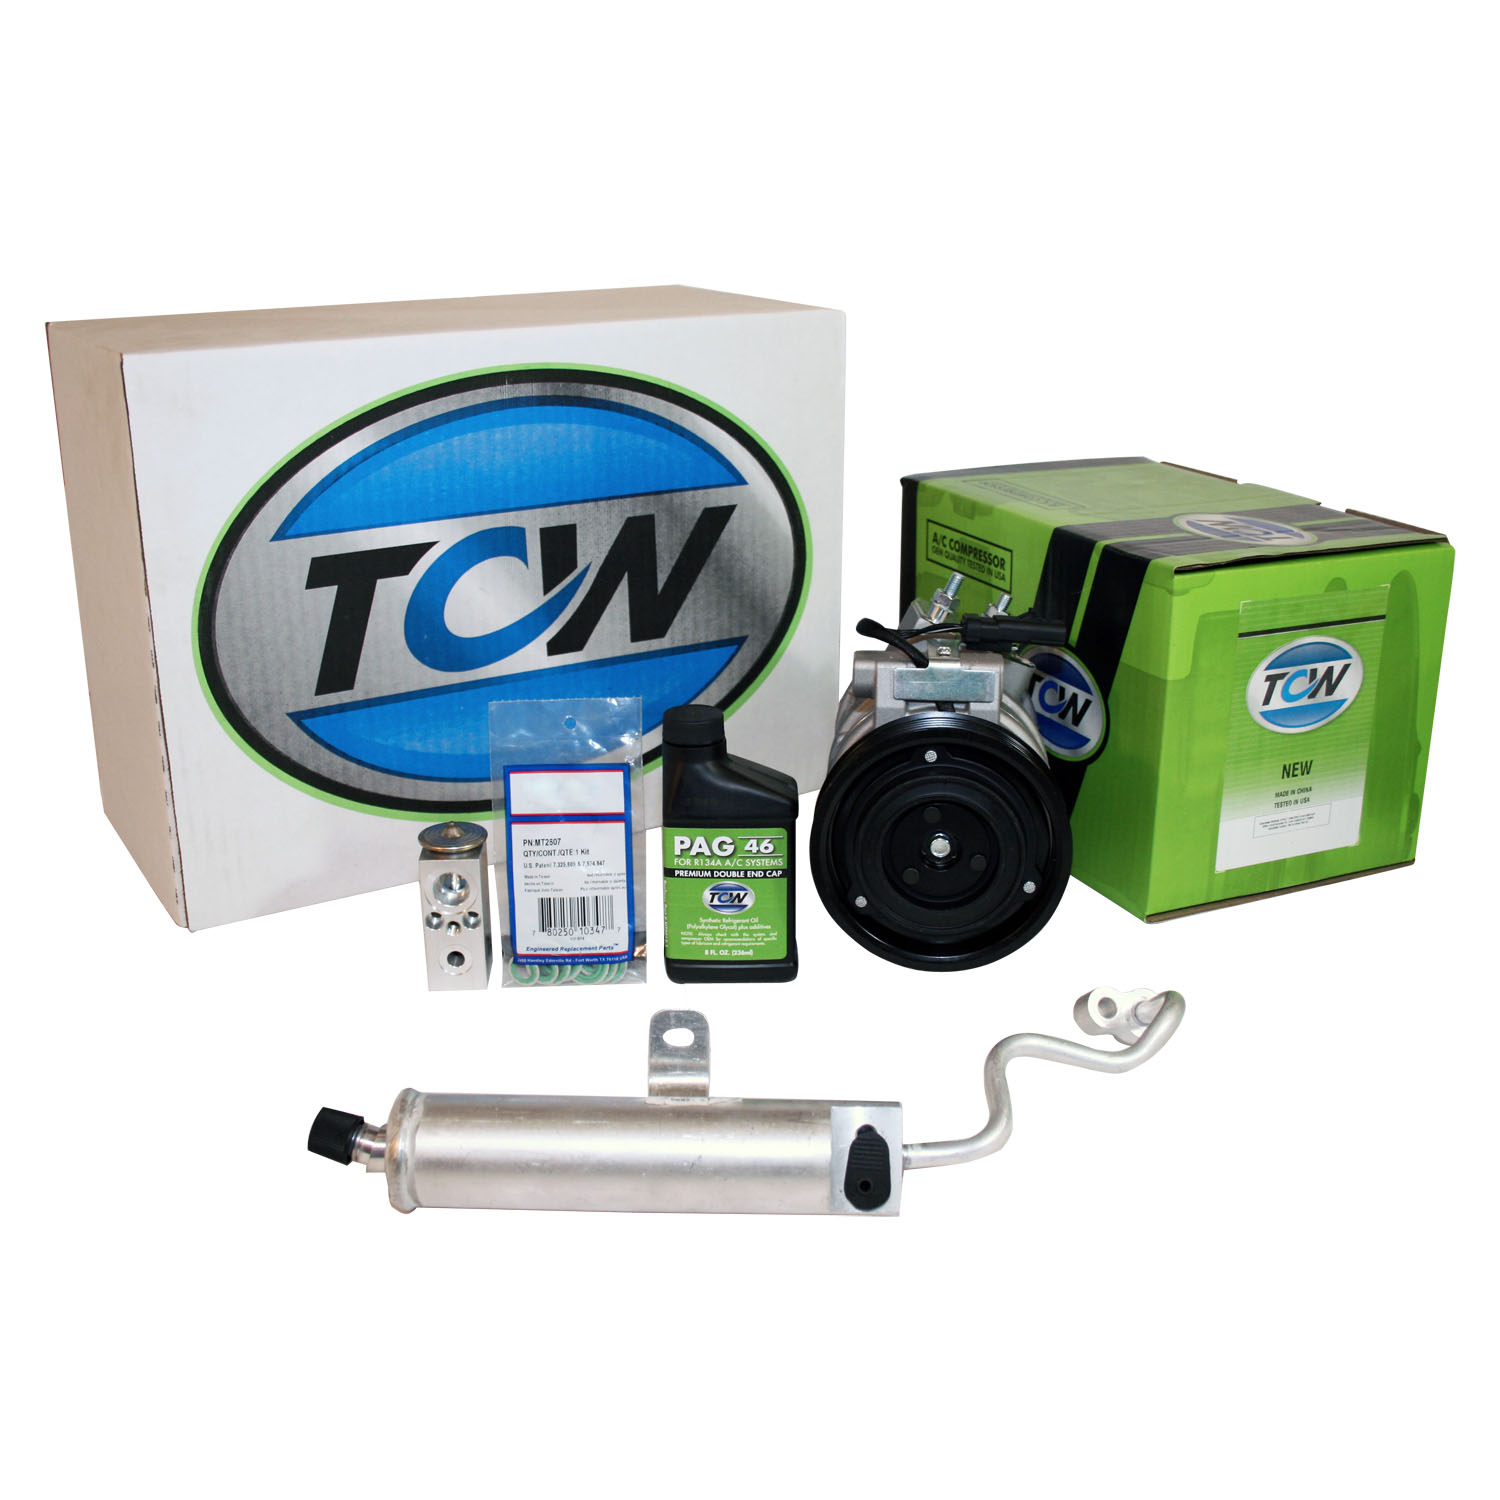 TCW Vehicle A/C Kit K1000452N New Product Image field_60b6a13a6e67c